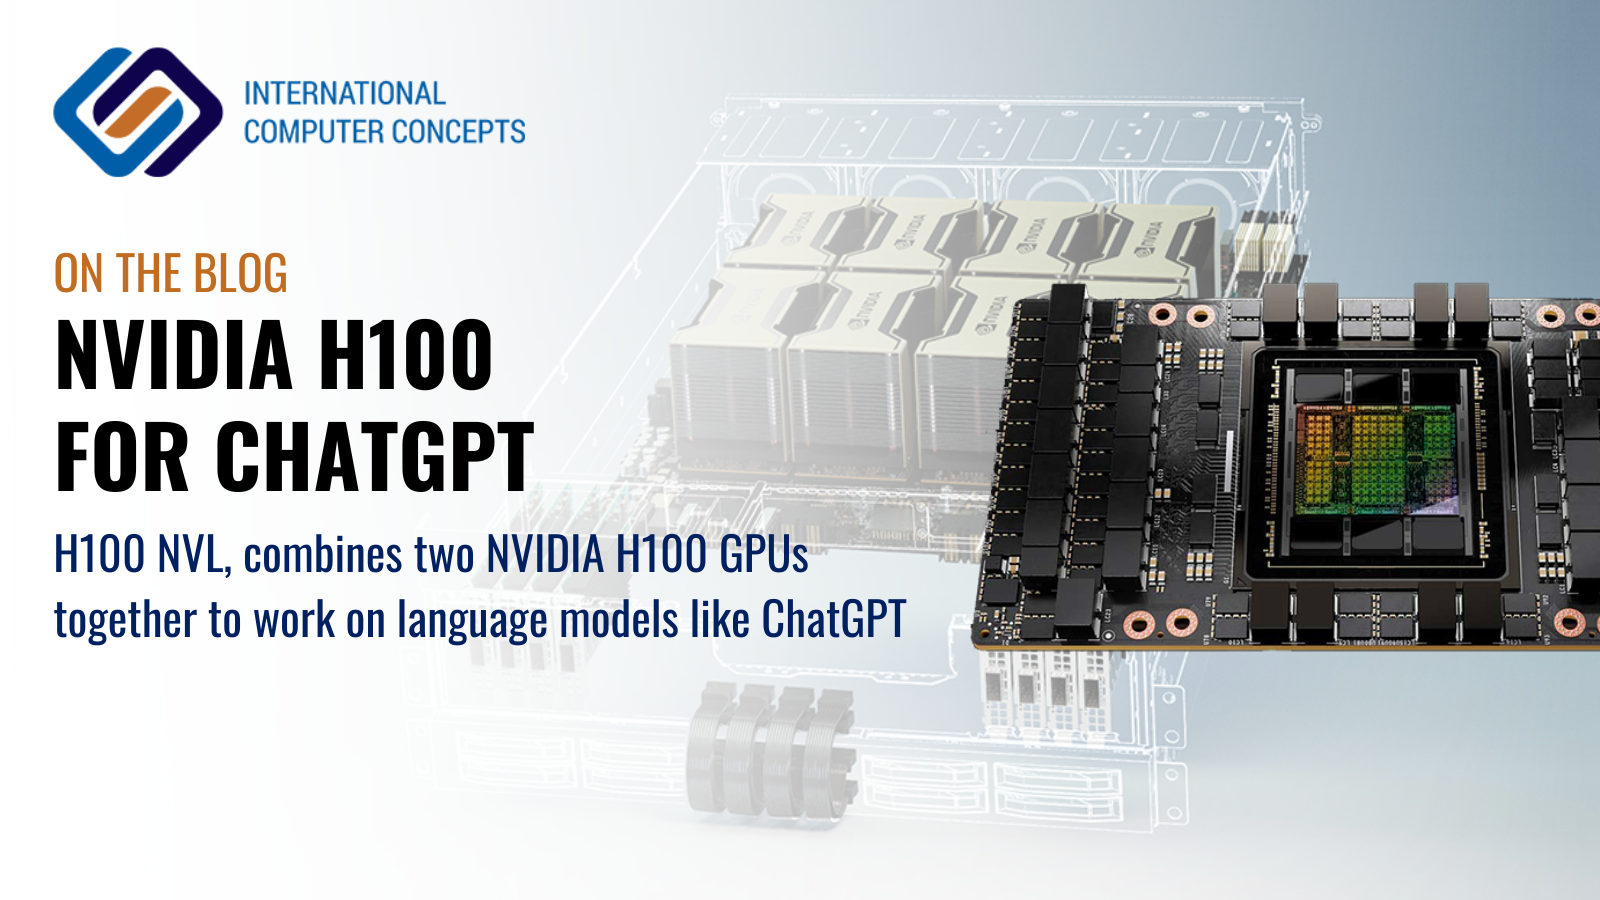 Meet NVIDIAs new ChatGPT enabler - H100 NVL